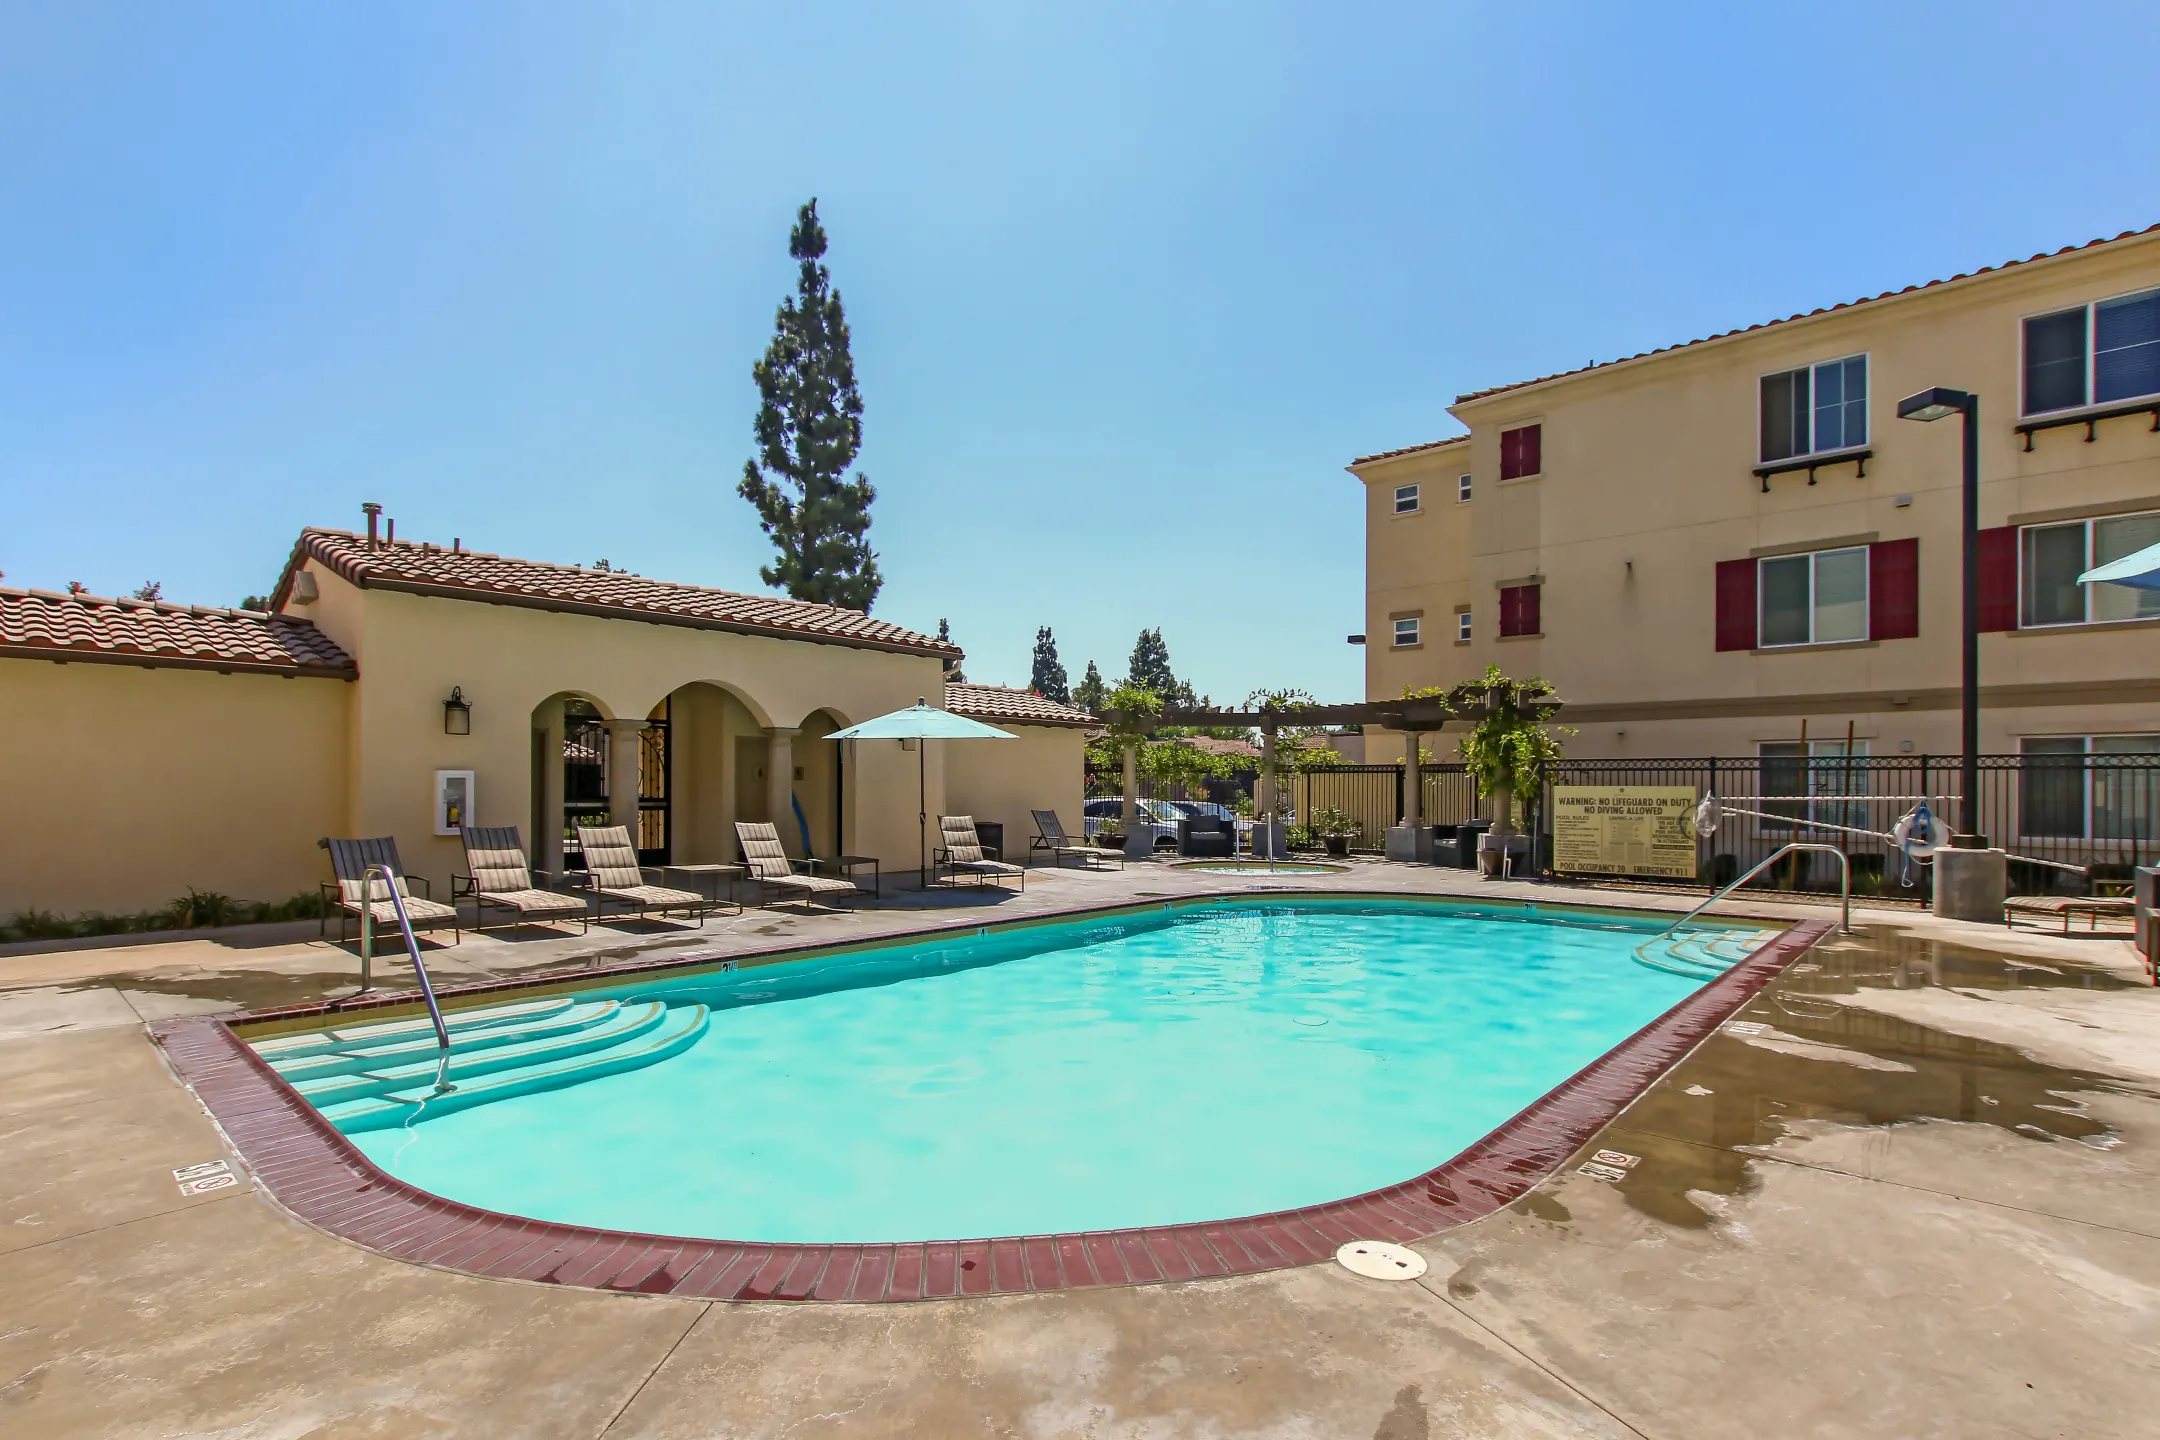 Villa Serena Apartments Senior Living - 11401 Central Ave | Chino, CA ...